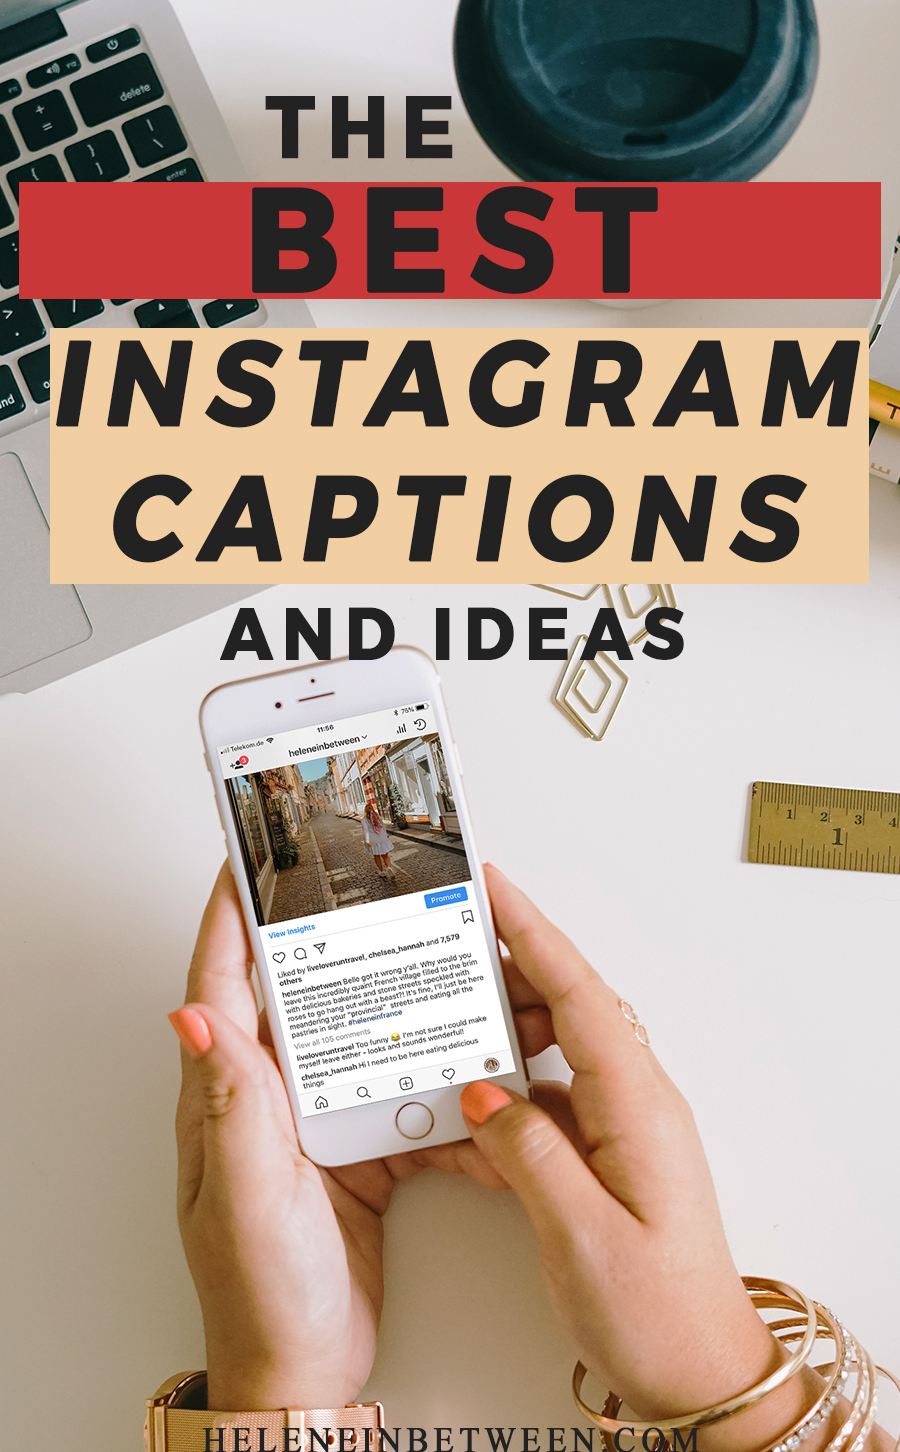 5 day instagram challenge - follow me instagram captions